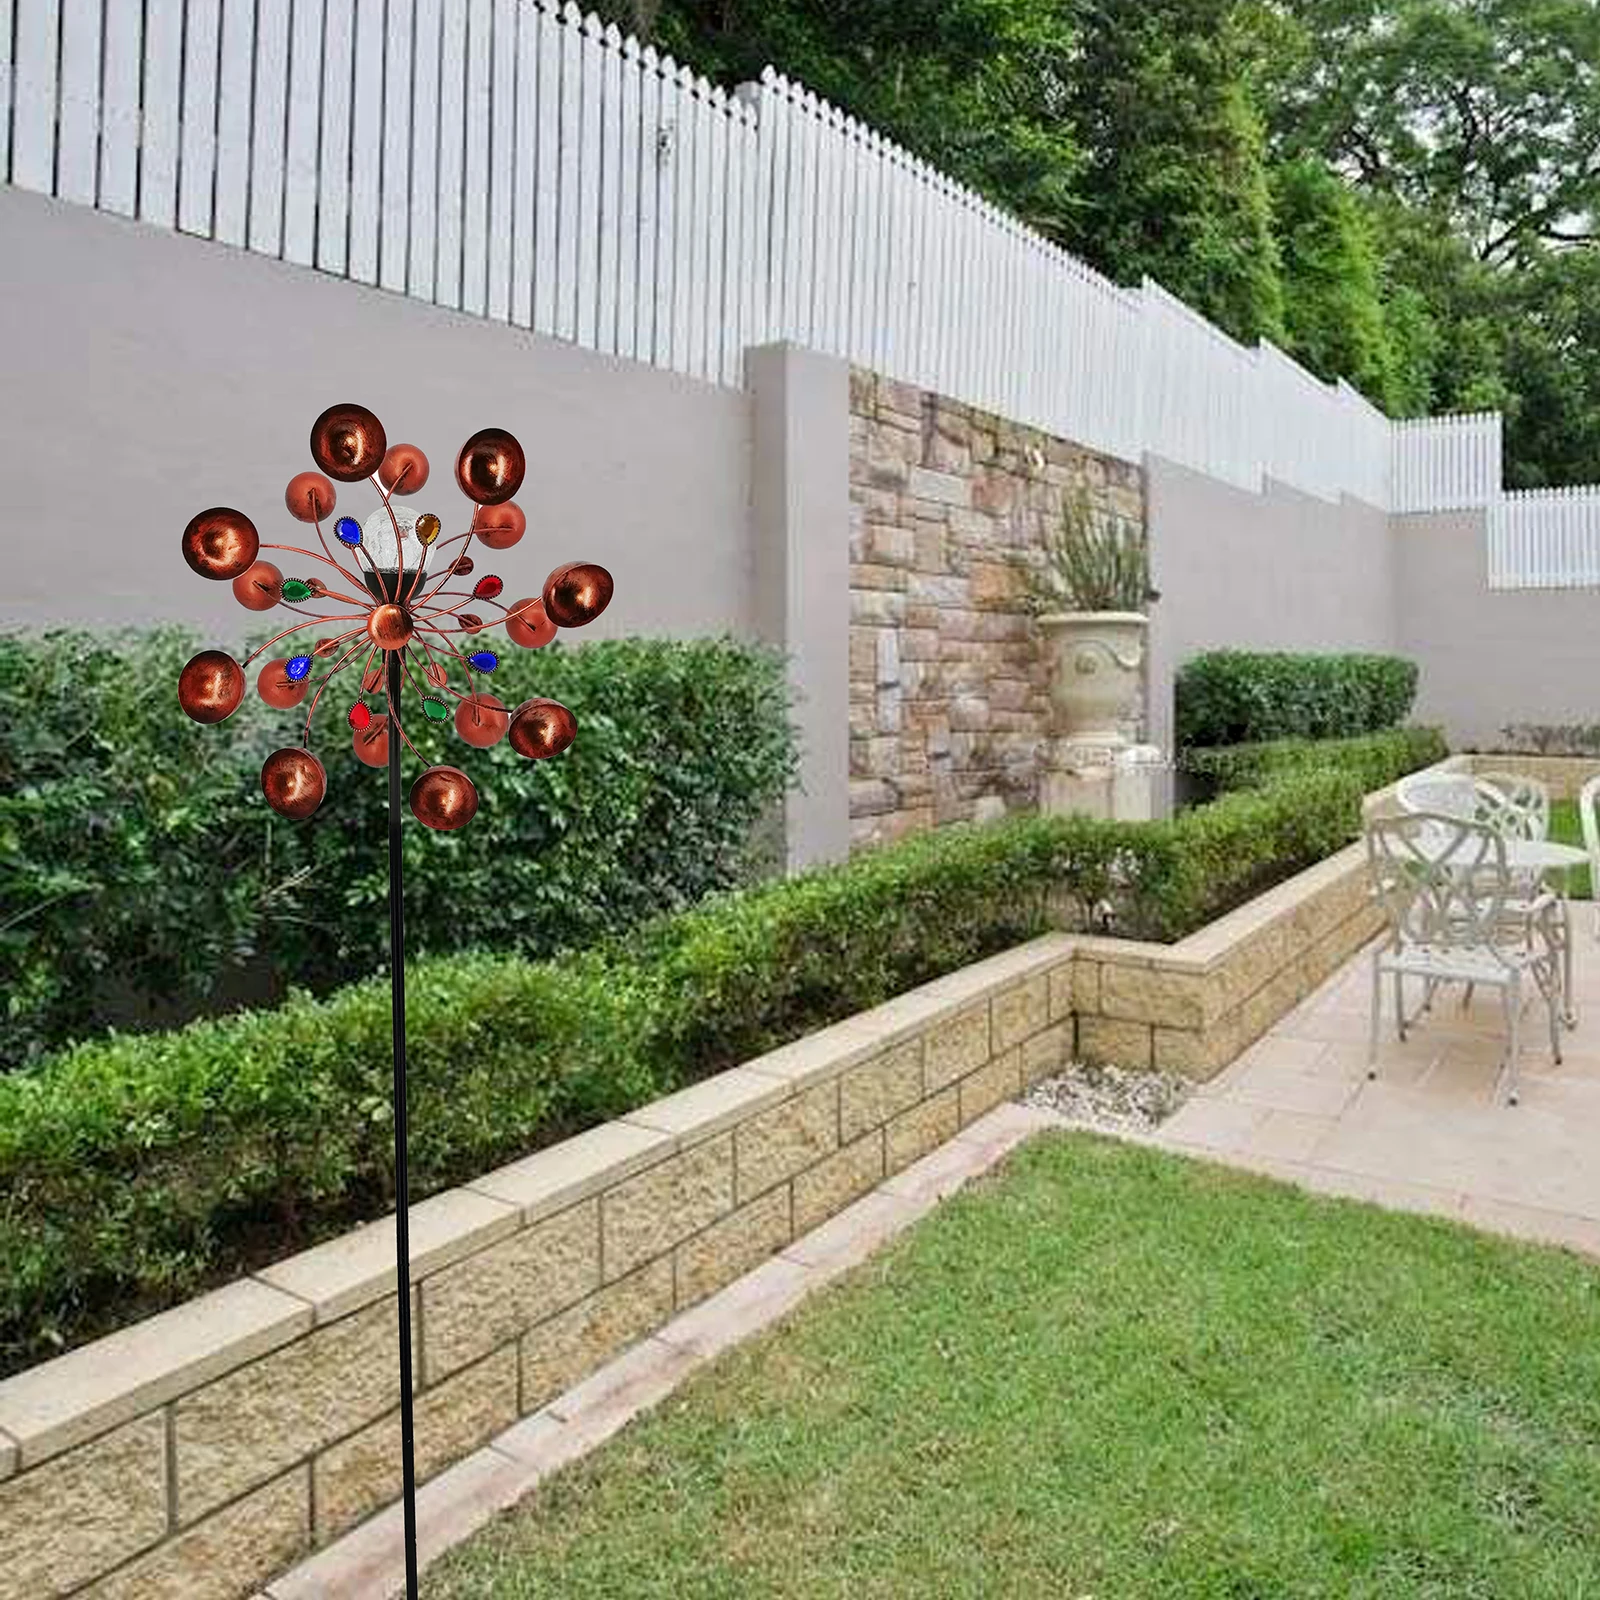 Details about   BRONZE Metal DOUBLE Spiral SOLAR Garden Wind SPINNER Stake Outdoor Yard Lawn Art 